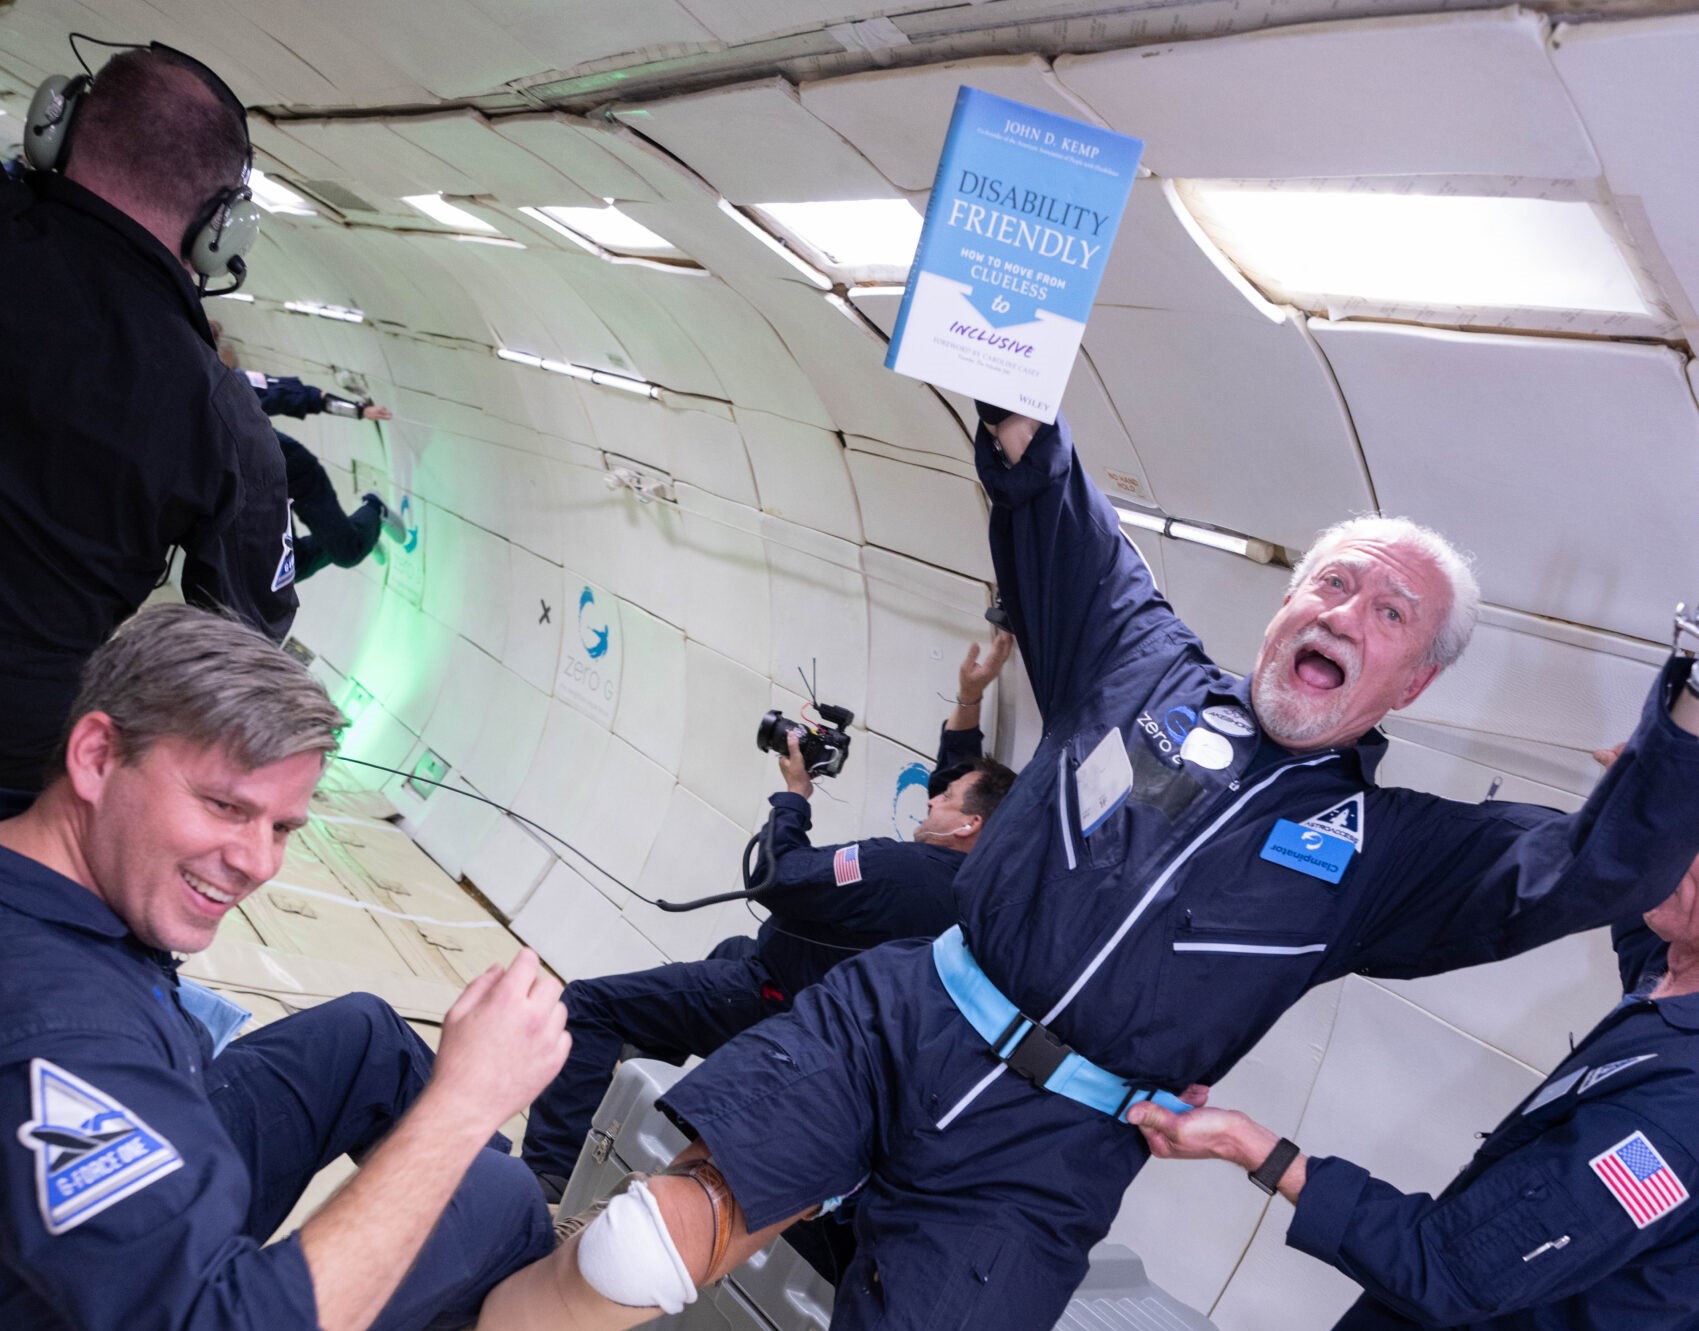 John Kemp Flight 2 ambassador, showing off his new book- Disability Friendly